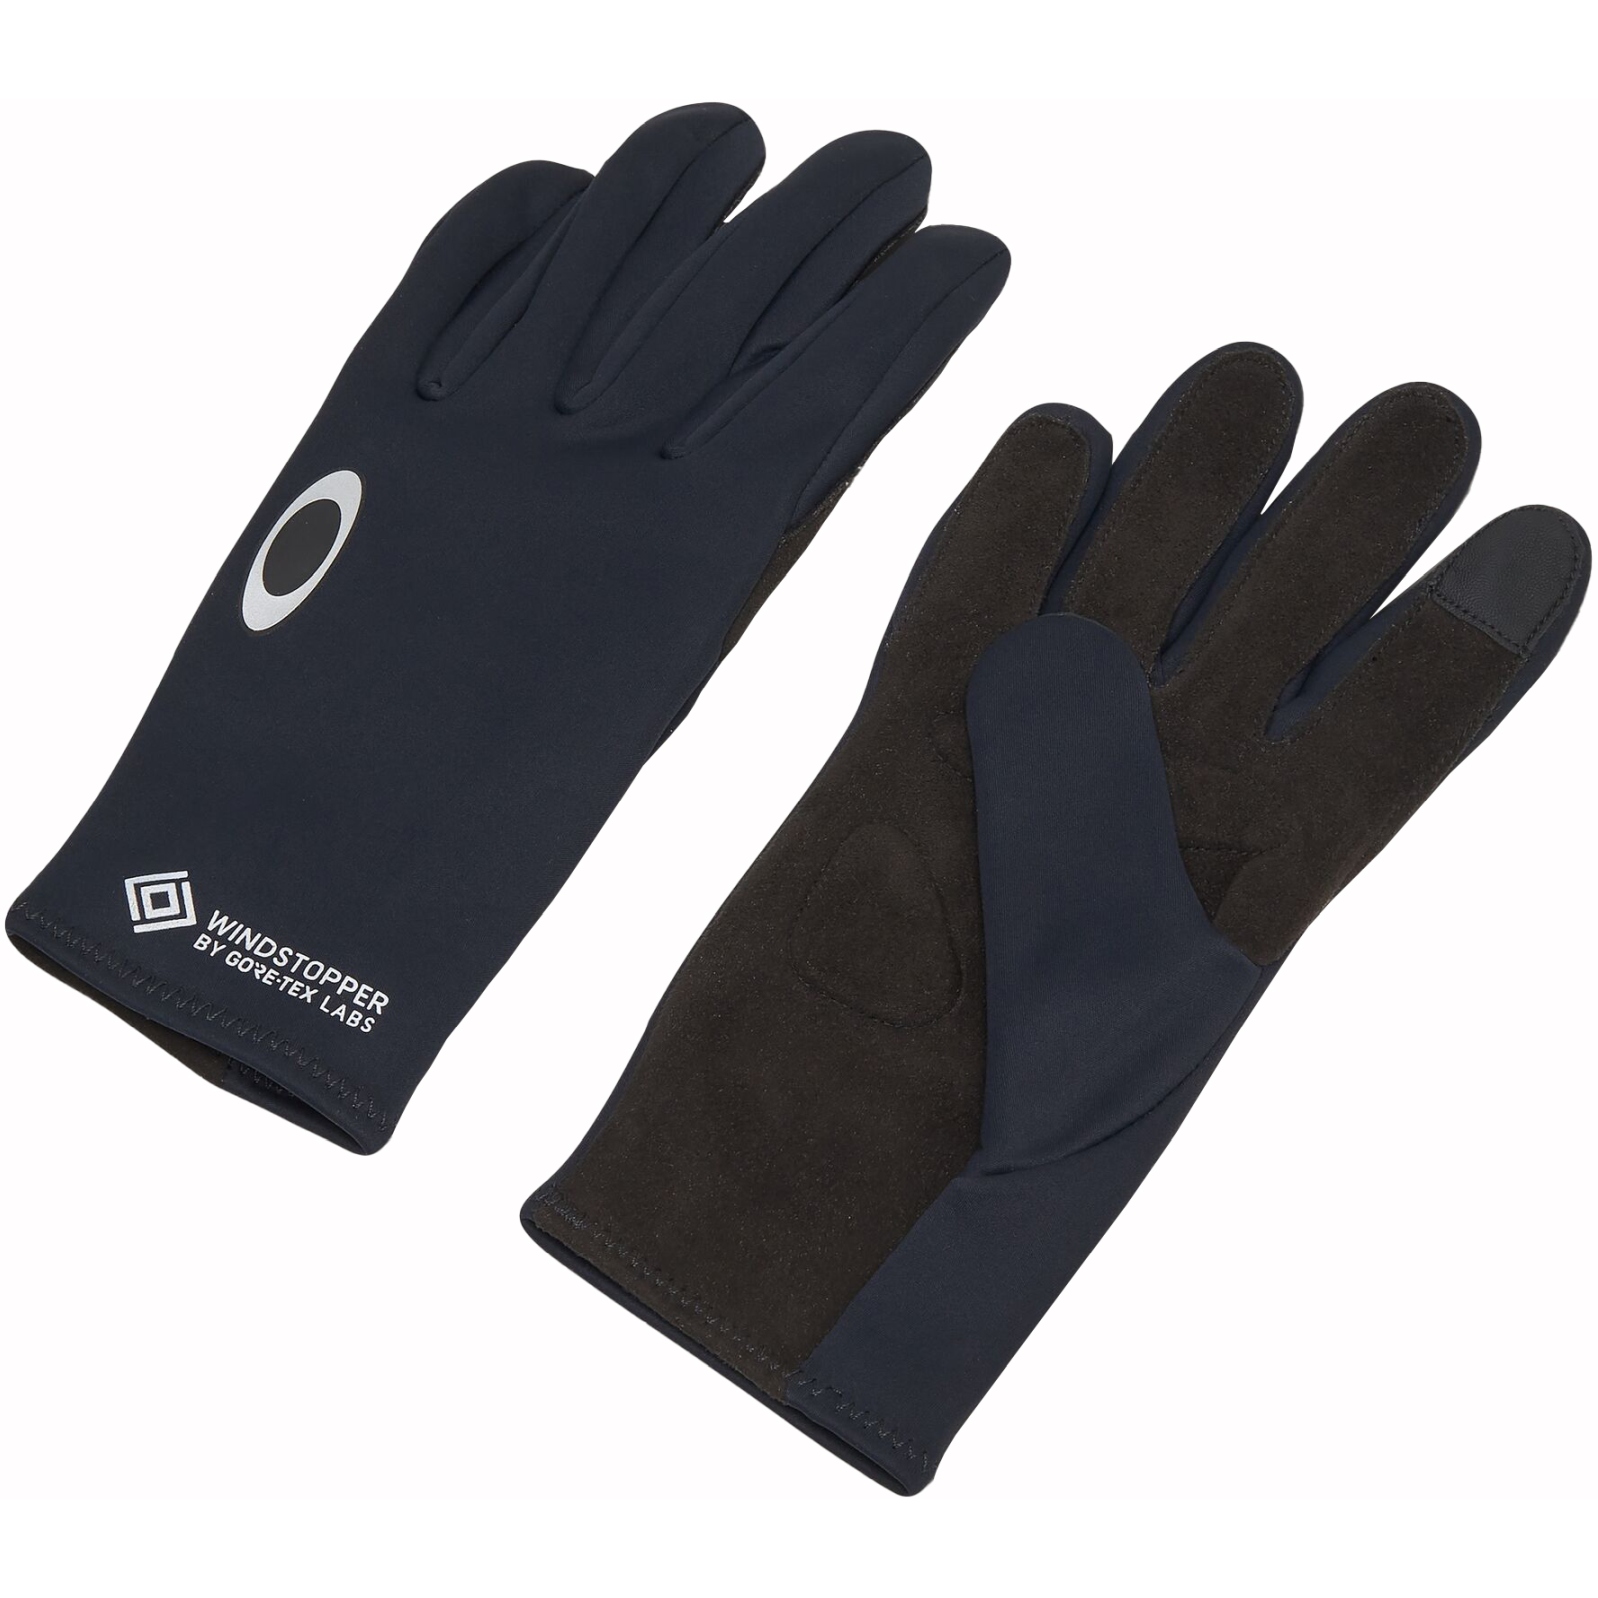 Productfoto van Oakley Endurance Ultra GTX Road Handschoenen - Blackout